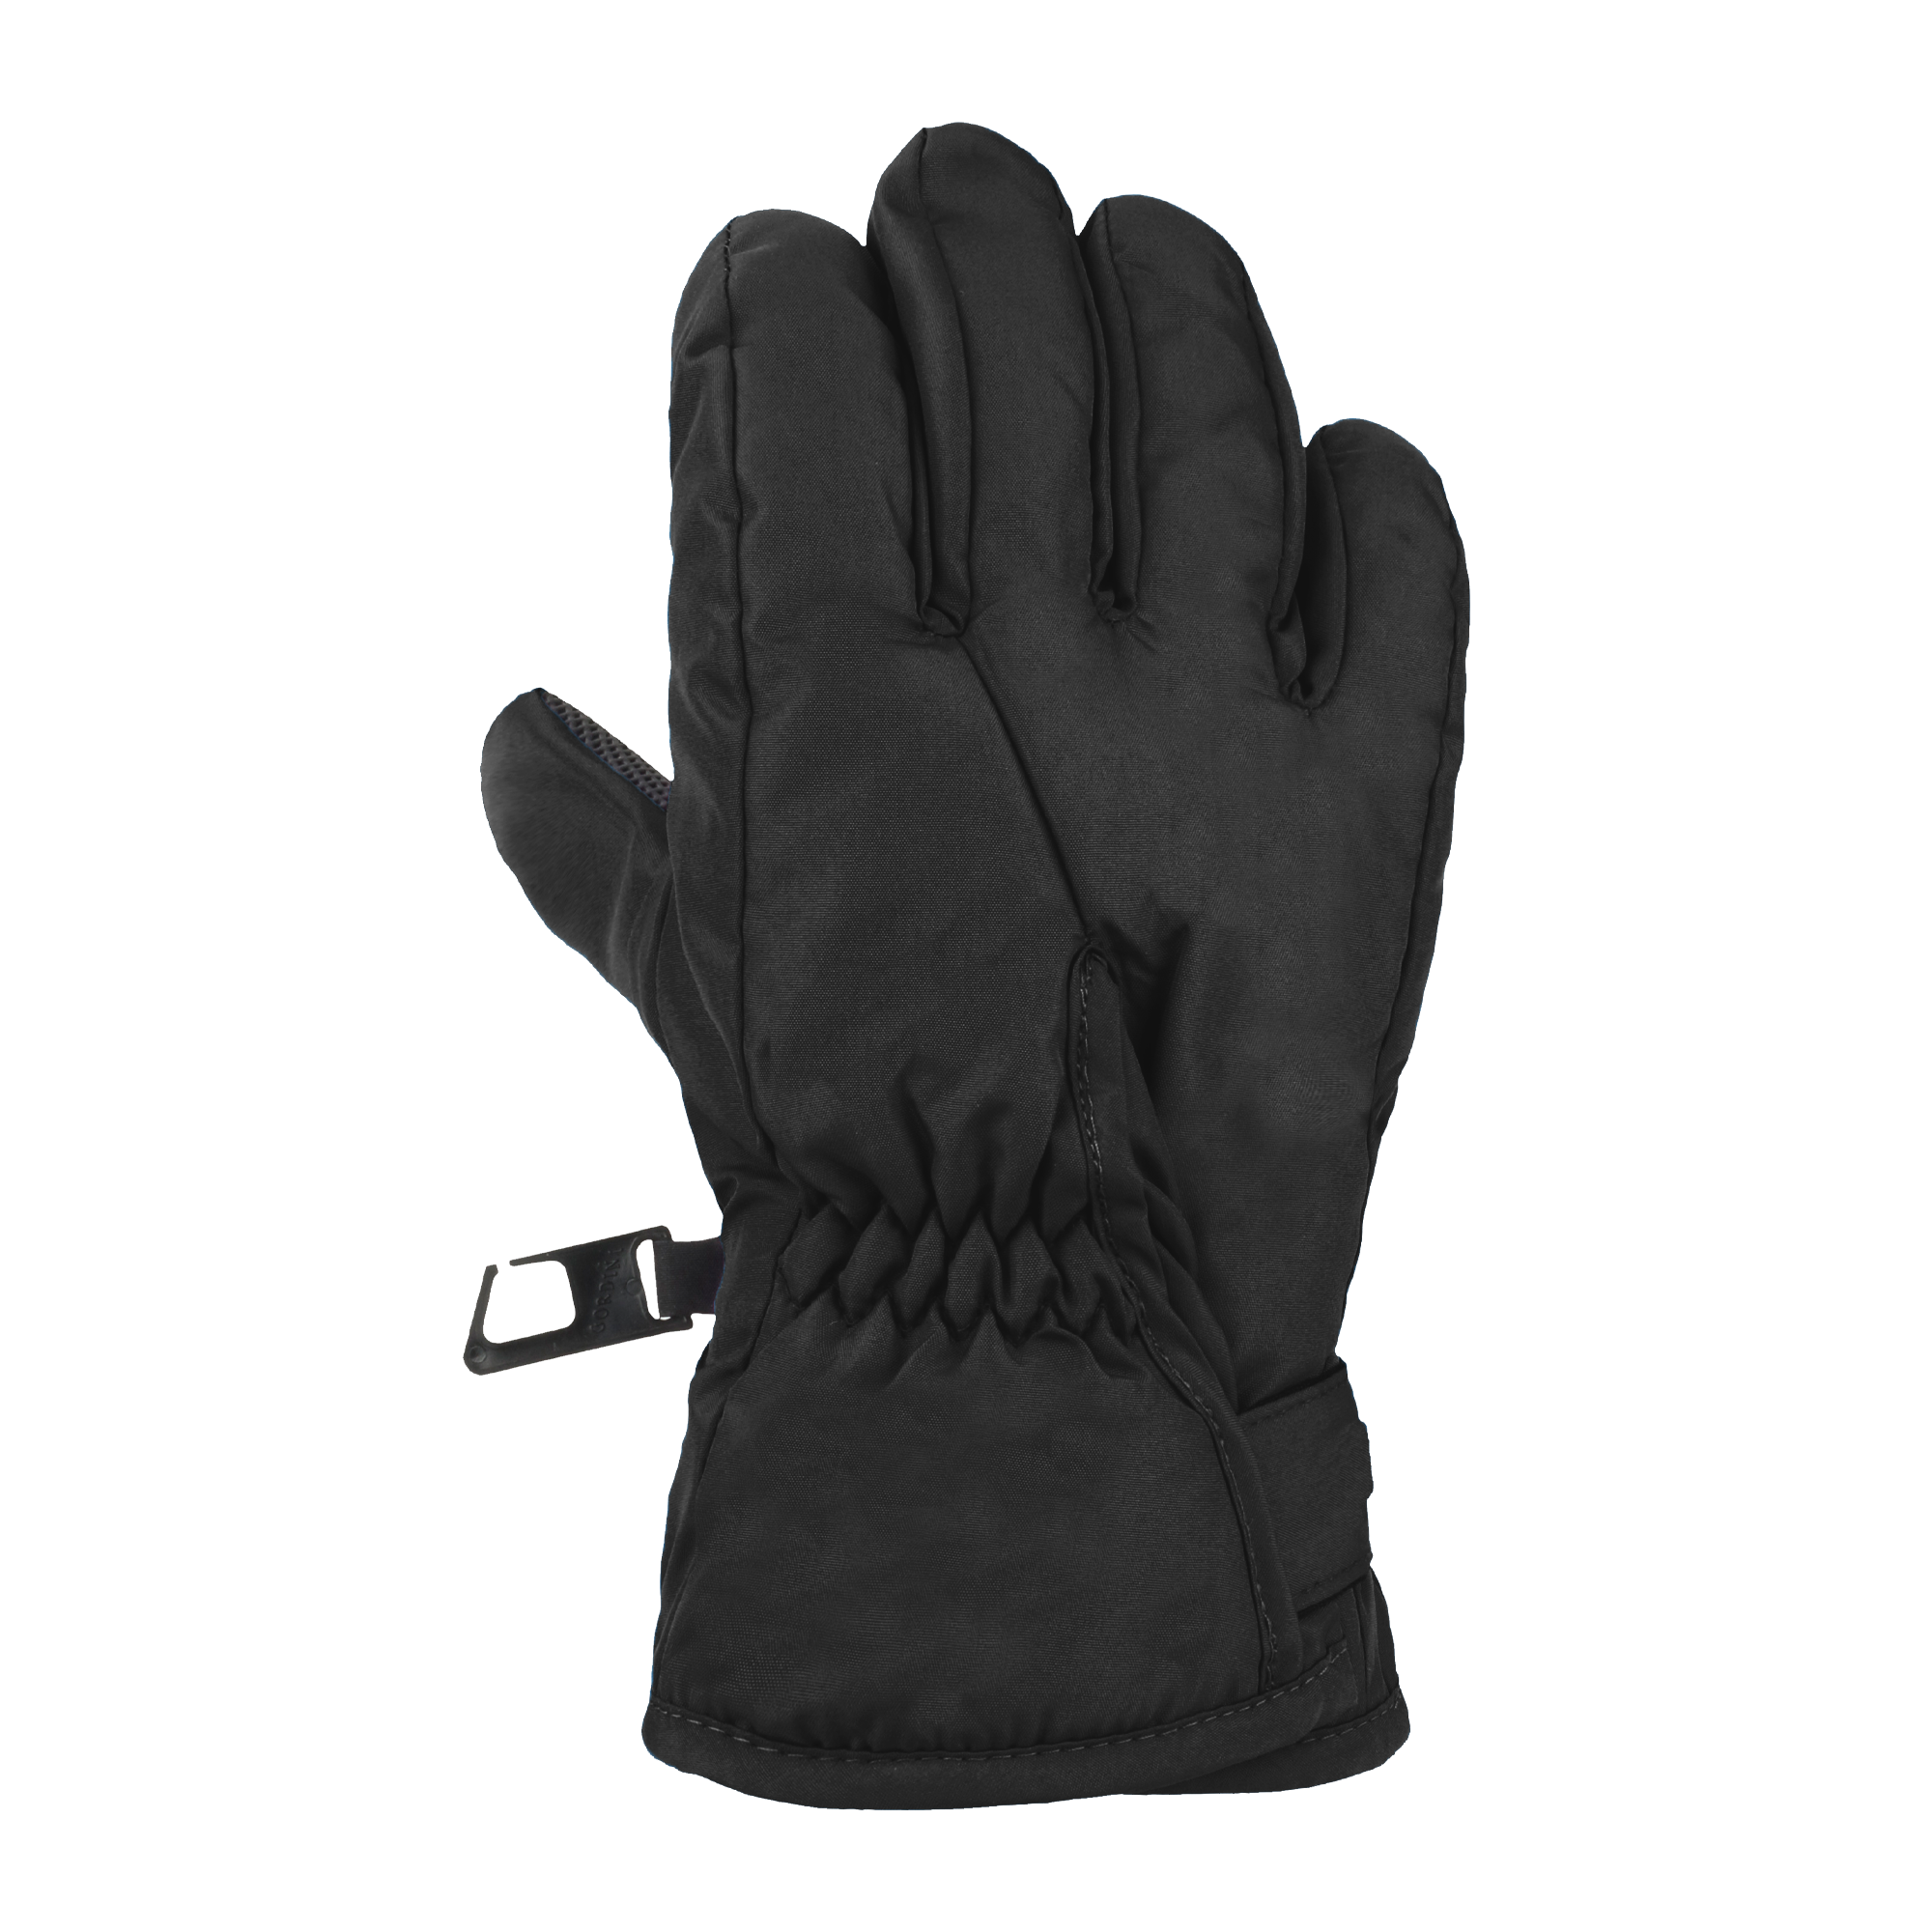 Gordini Wrap Around Children's Glove Black